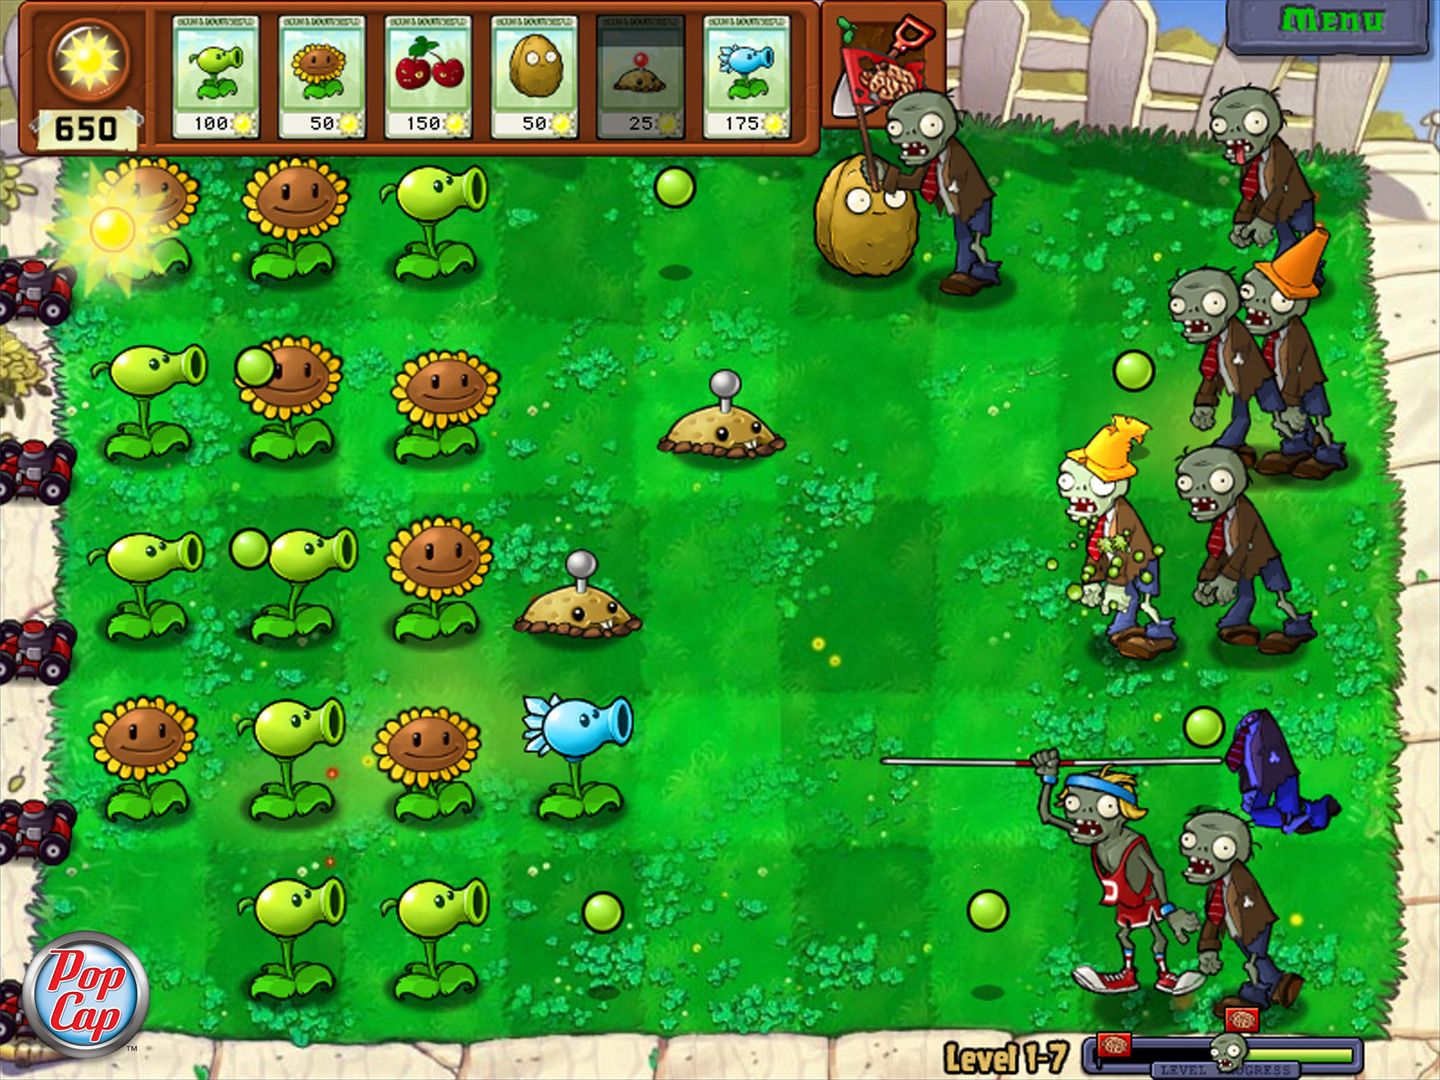  Plants vs Zombies : Video Games